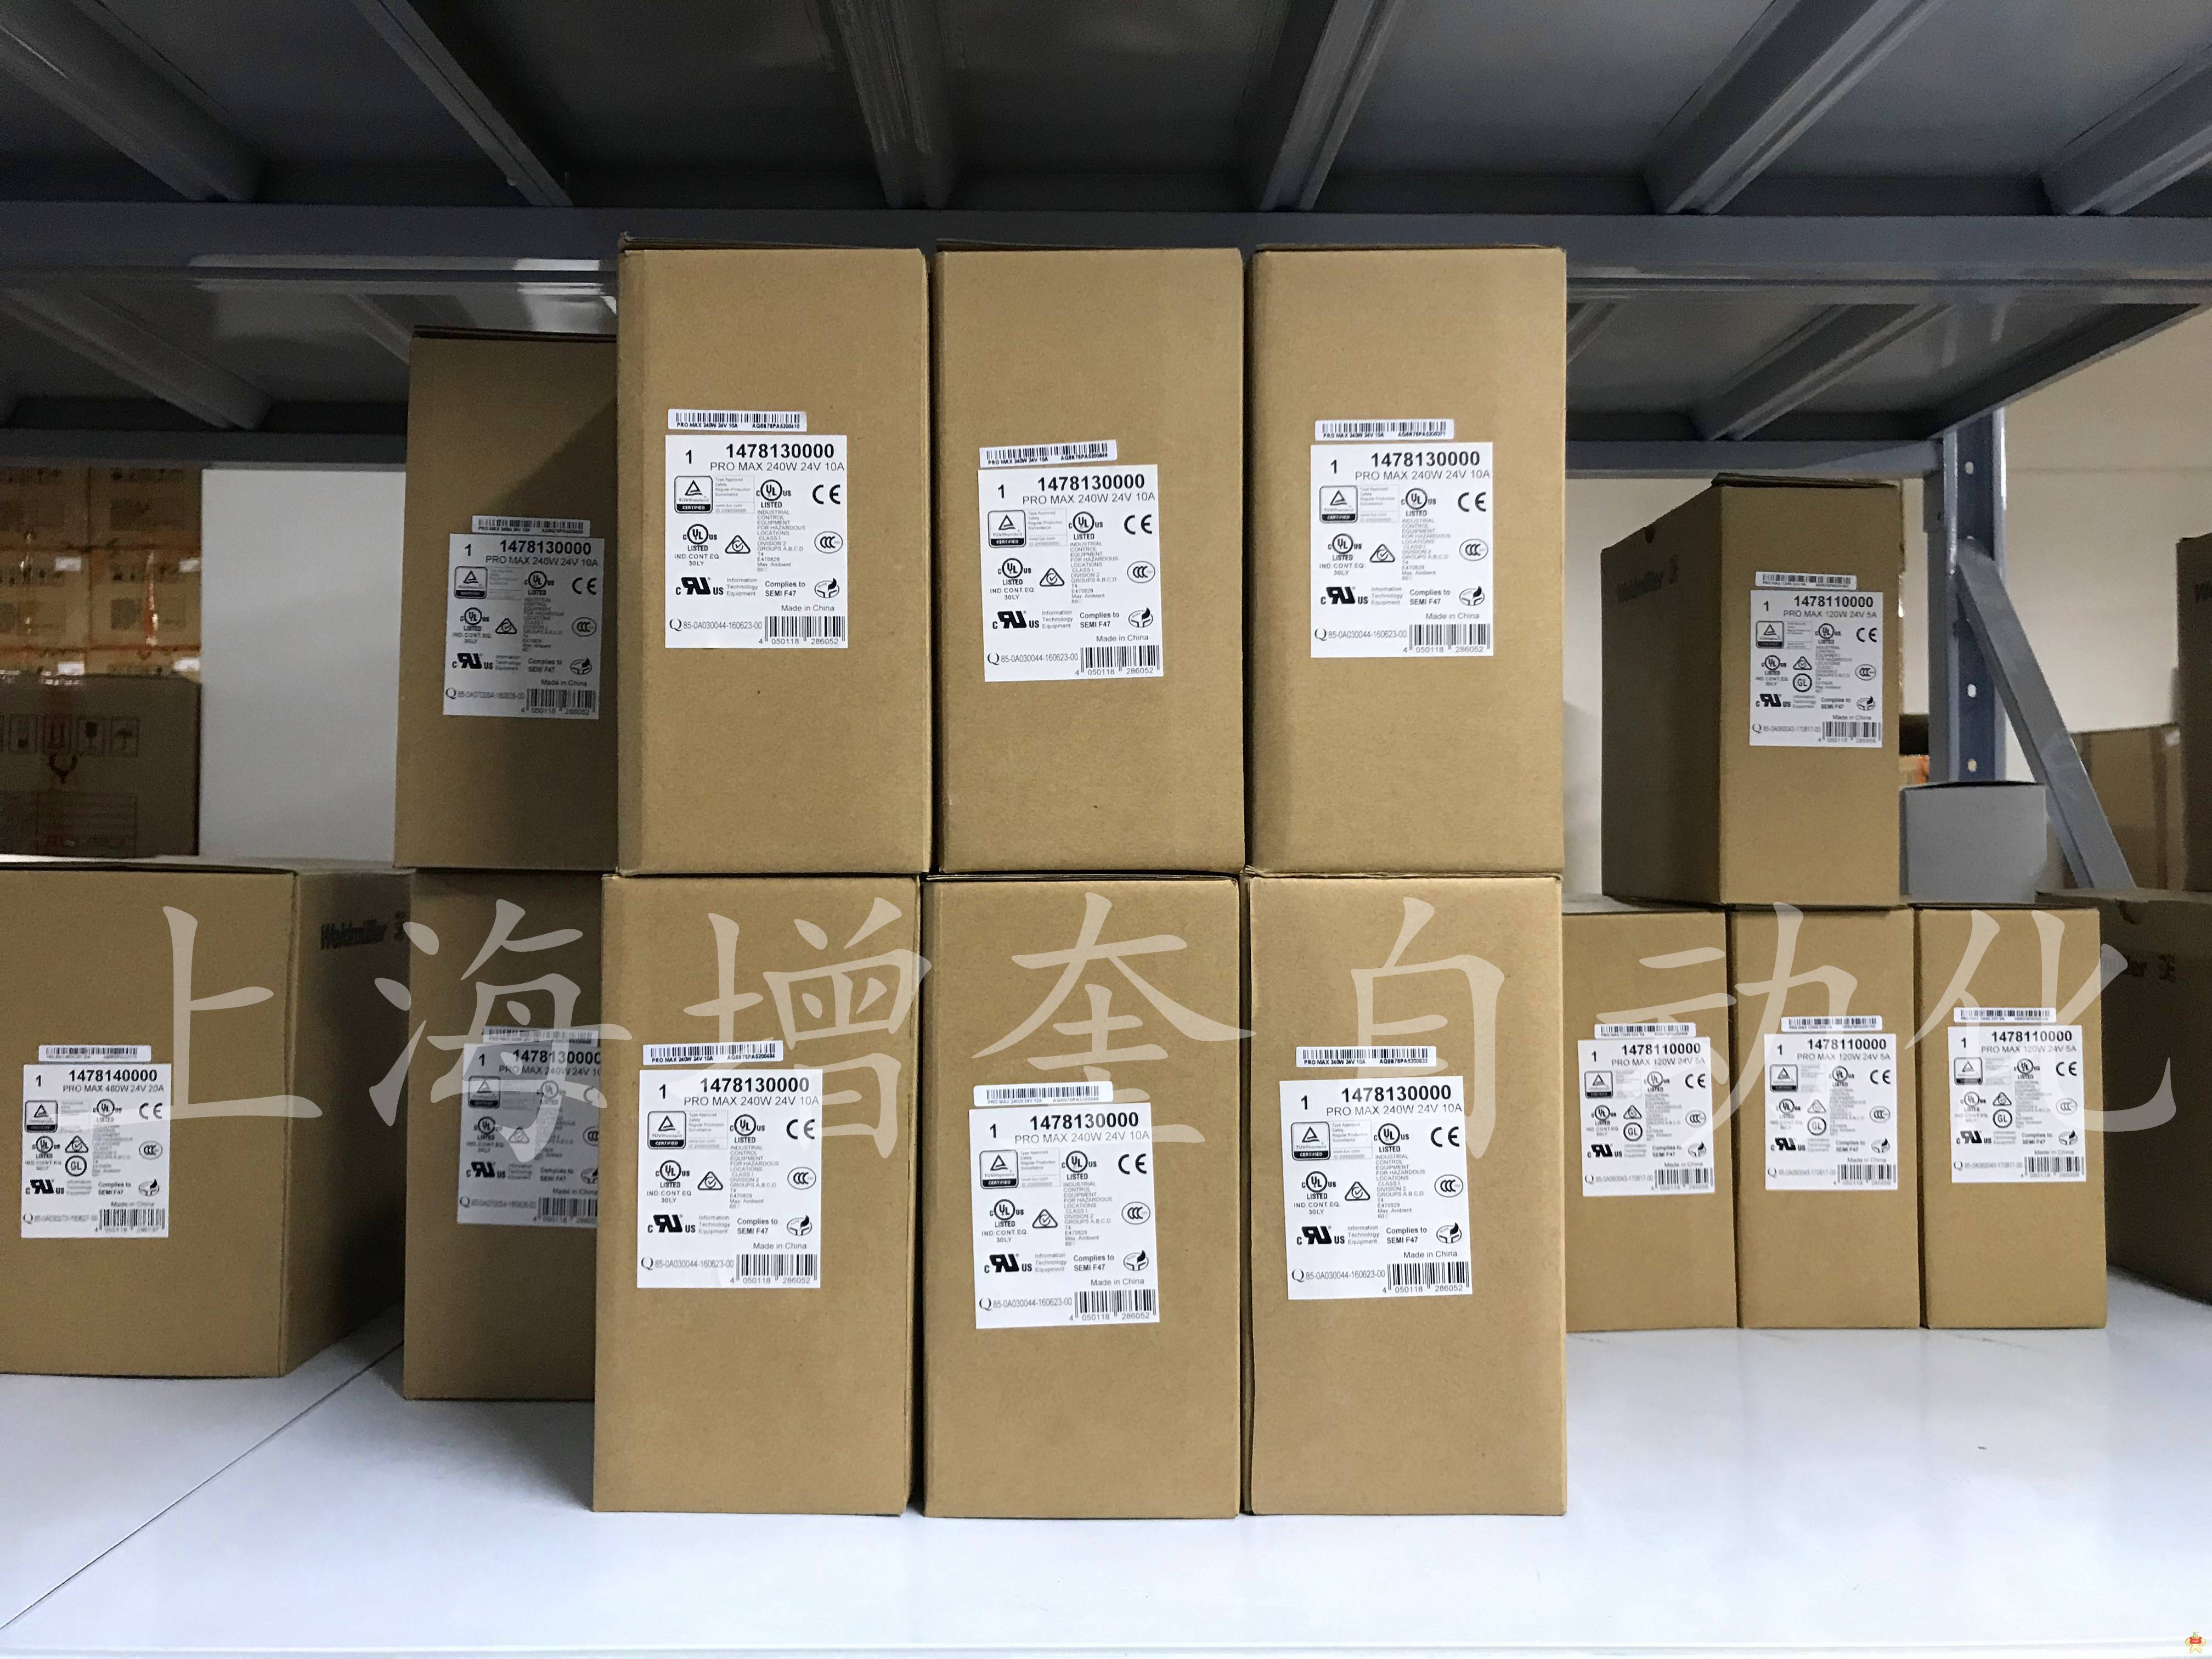 菲尼克斯UPS电源系列QUINT-UPS/ 24DC/ 24DC/20 - 2320238上海现货 菲尼克斯,UPS电源,QUINT-UPS/ 24DC,2320238